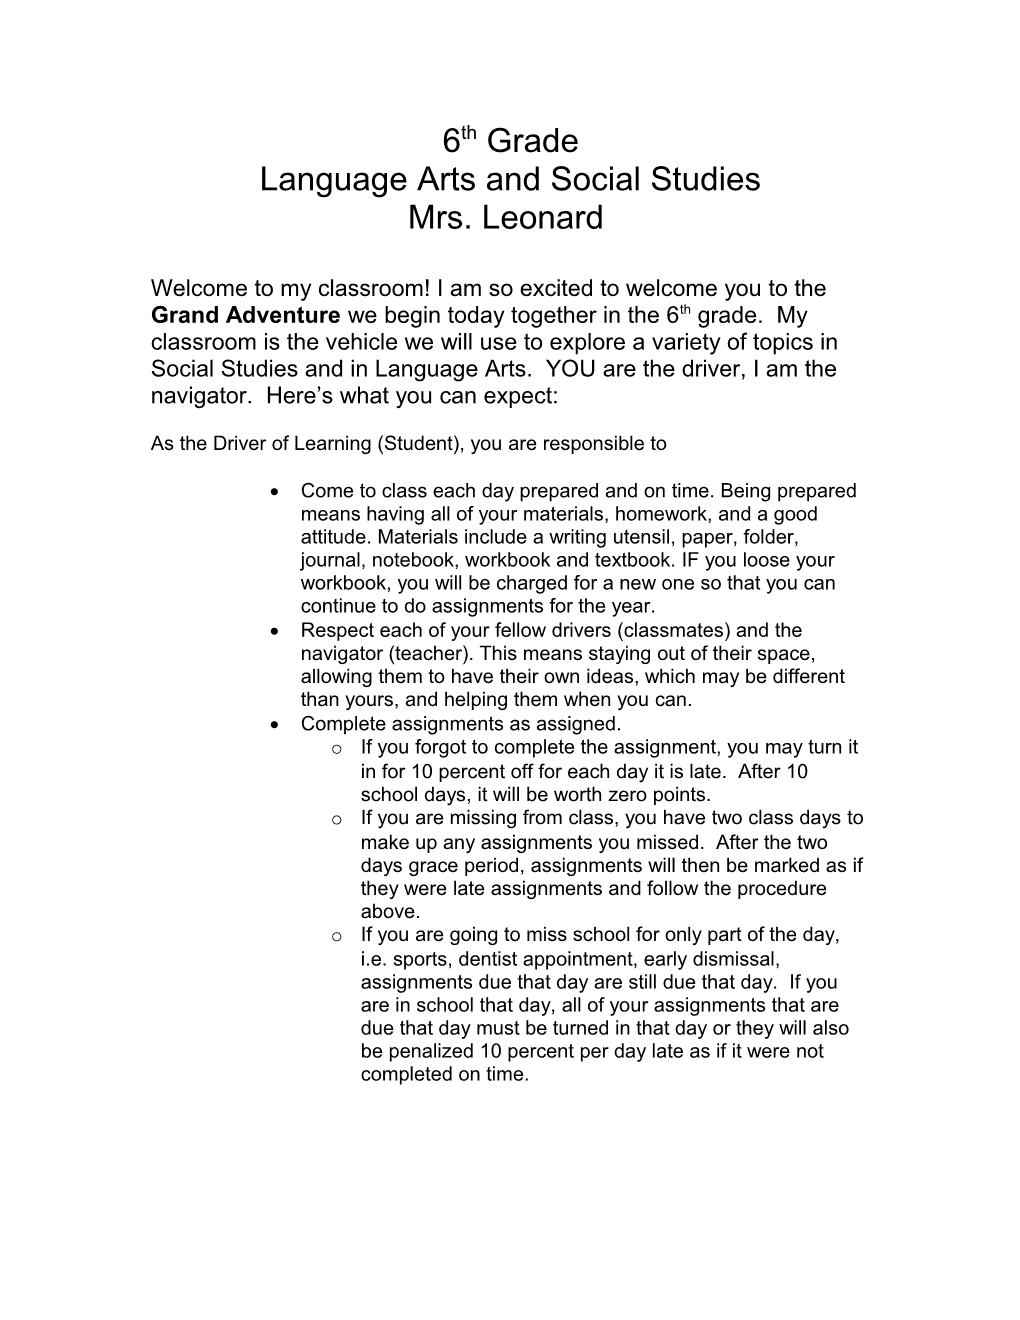 Language Arts and Social Studies